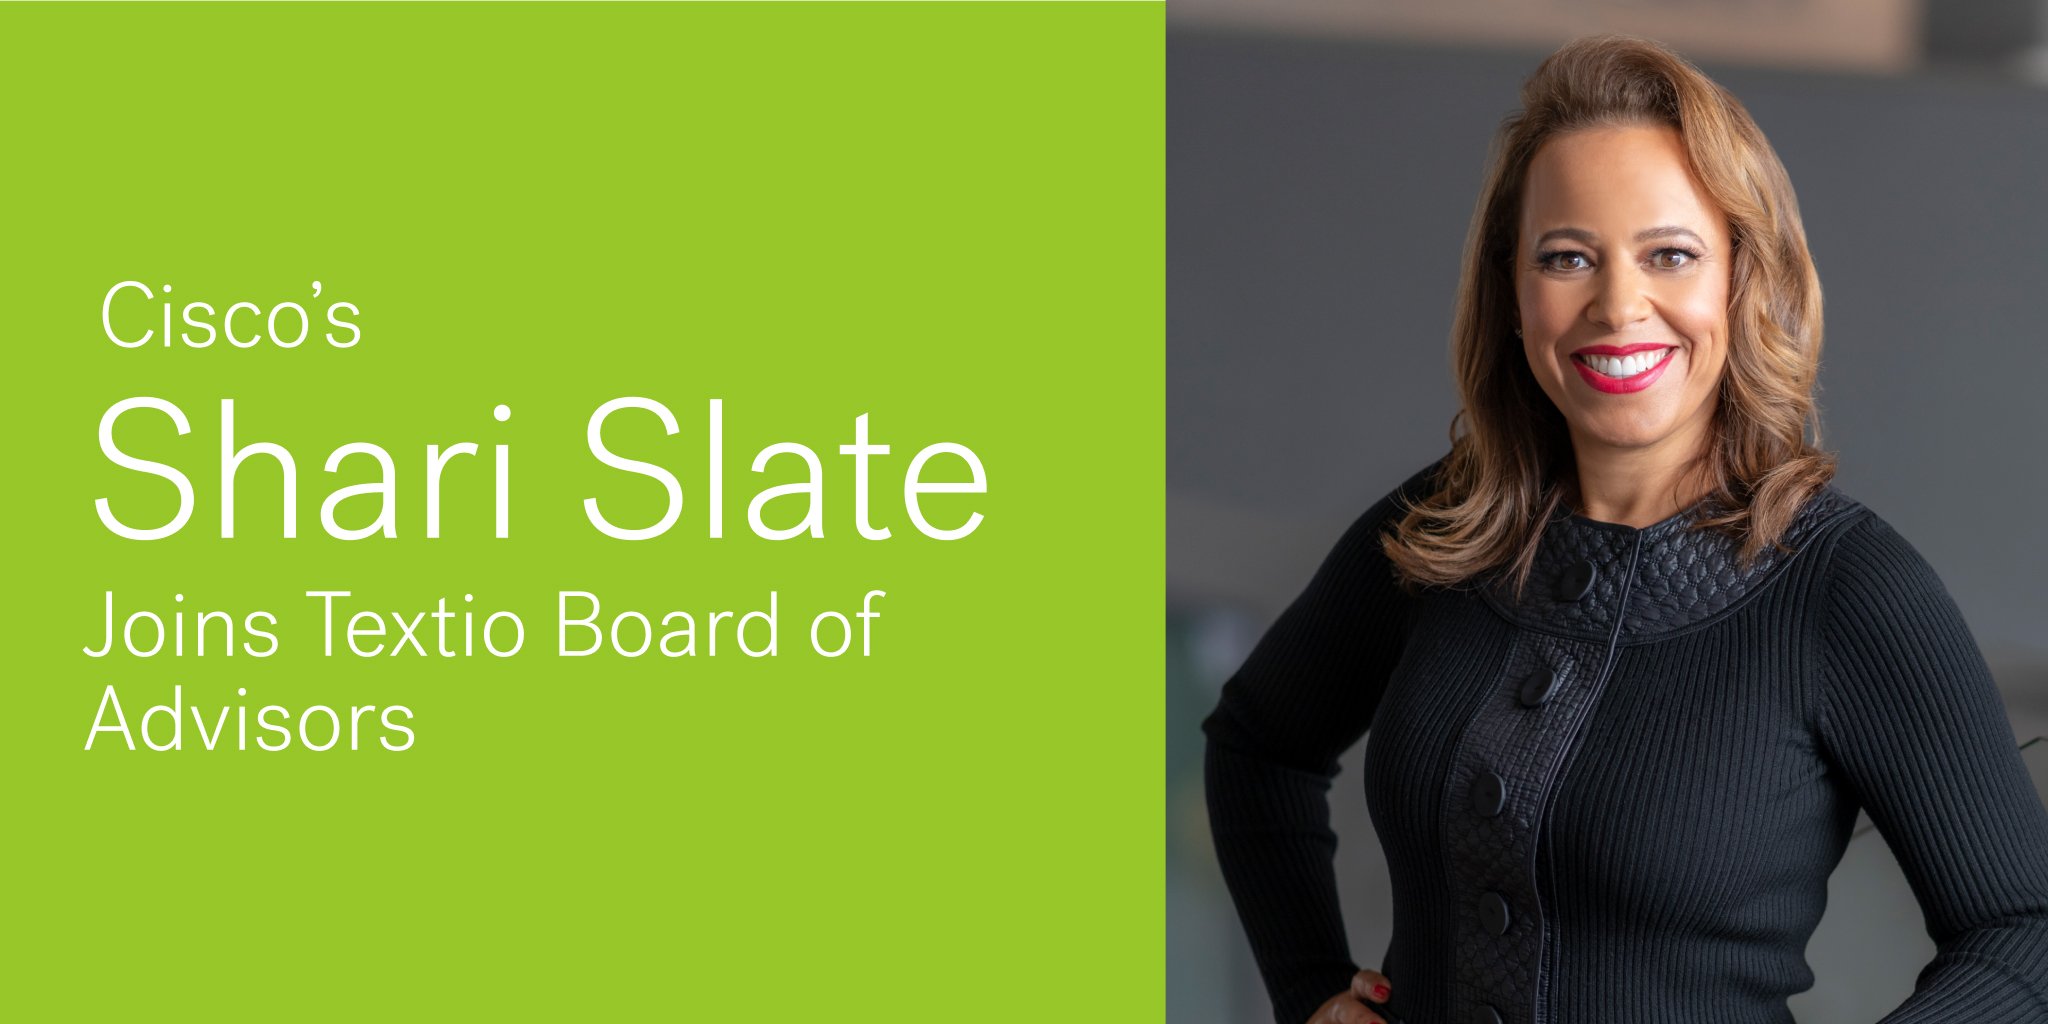 Image of Shari Slate next to text on green background "Cisco's Shari Slate Joins Textio Board of Advisors"